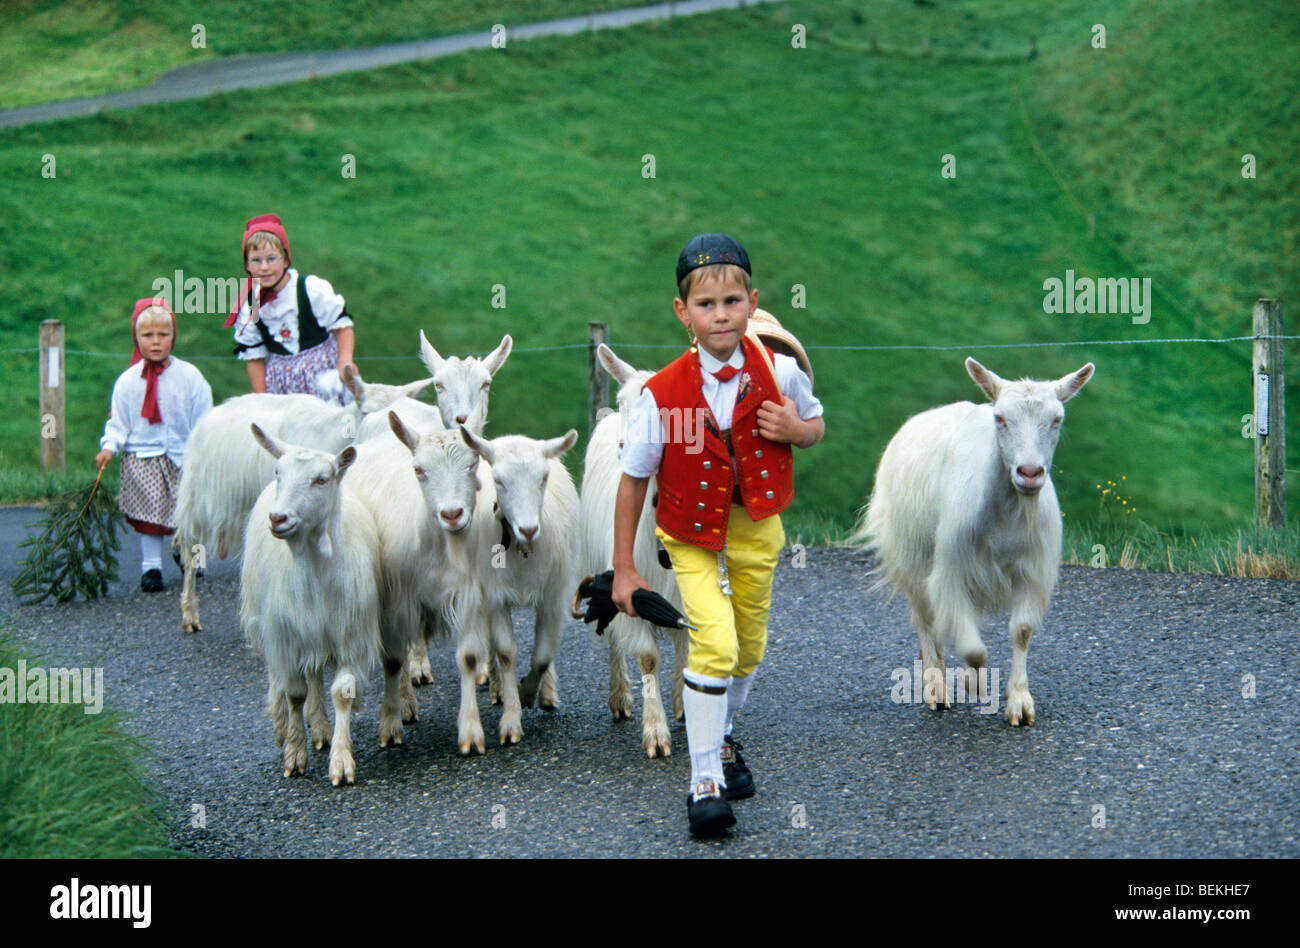 Children in traditional costumes herding goats (Capra hircus) during the Alpaufzug, Appenzell, Switzerland Stock Photo